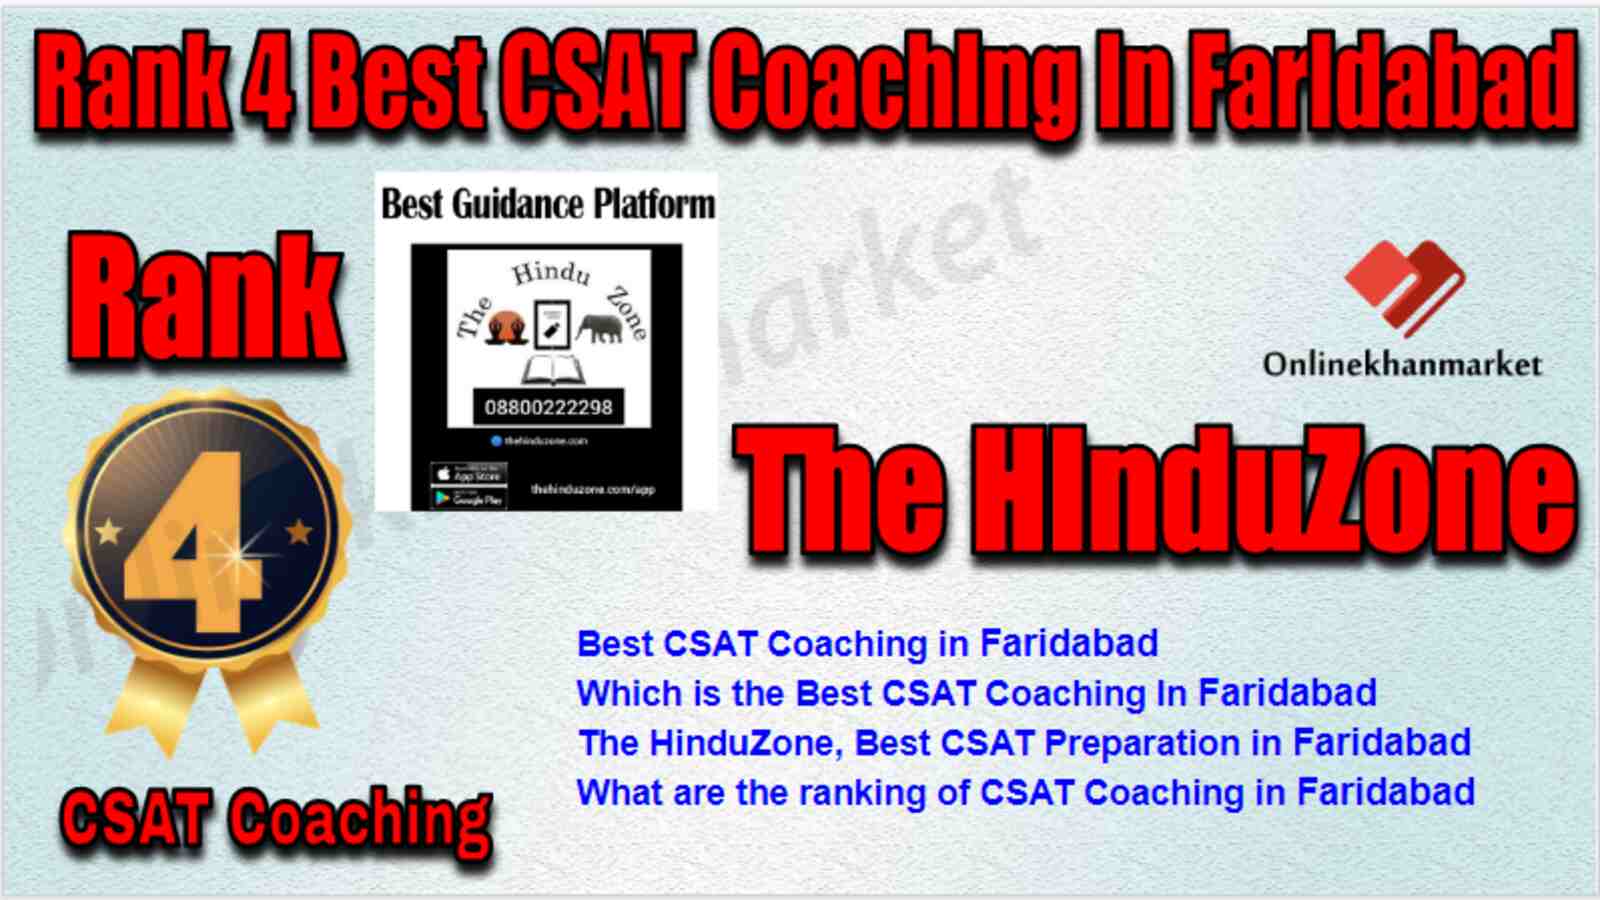 Rank 4 Best Csat Coaching in Faridabad